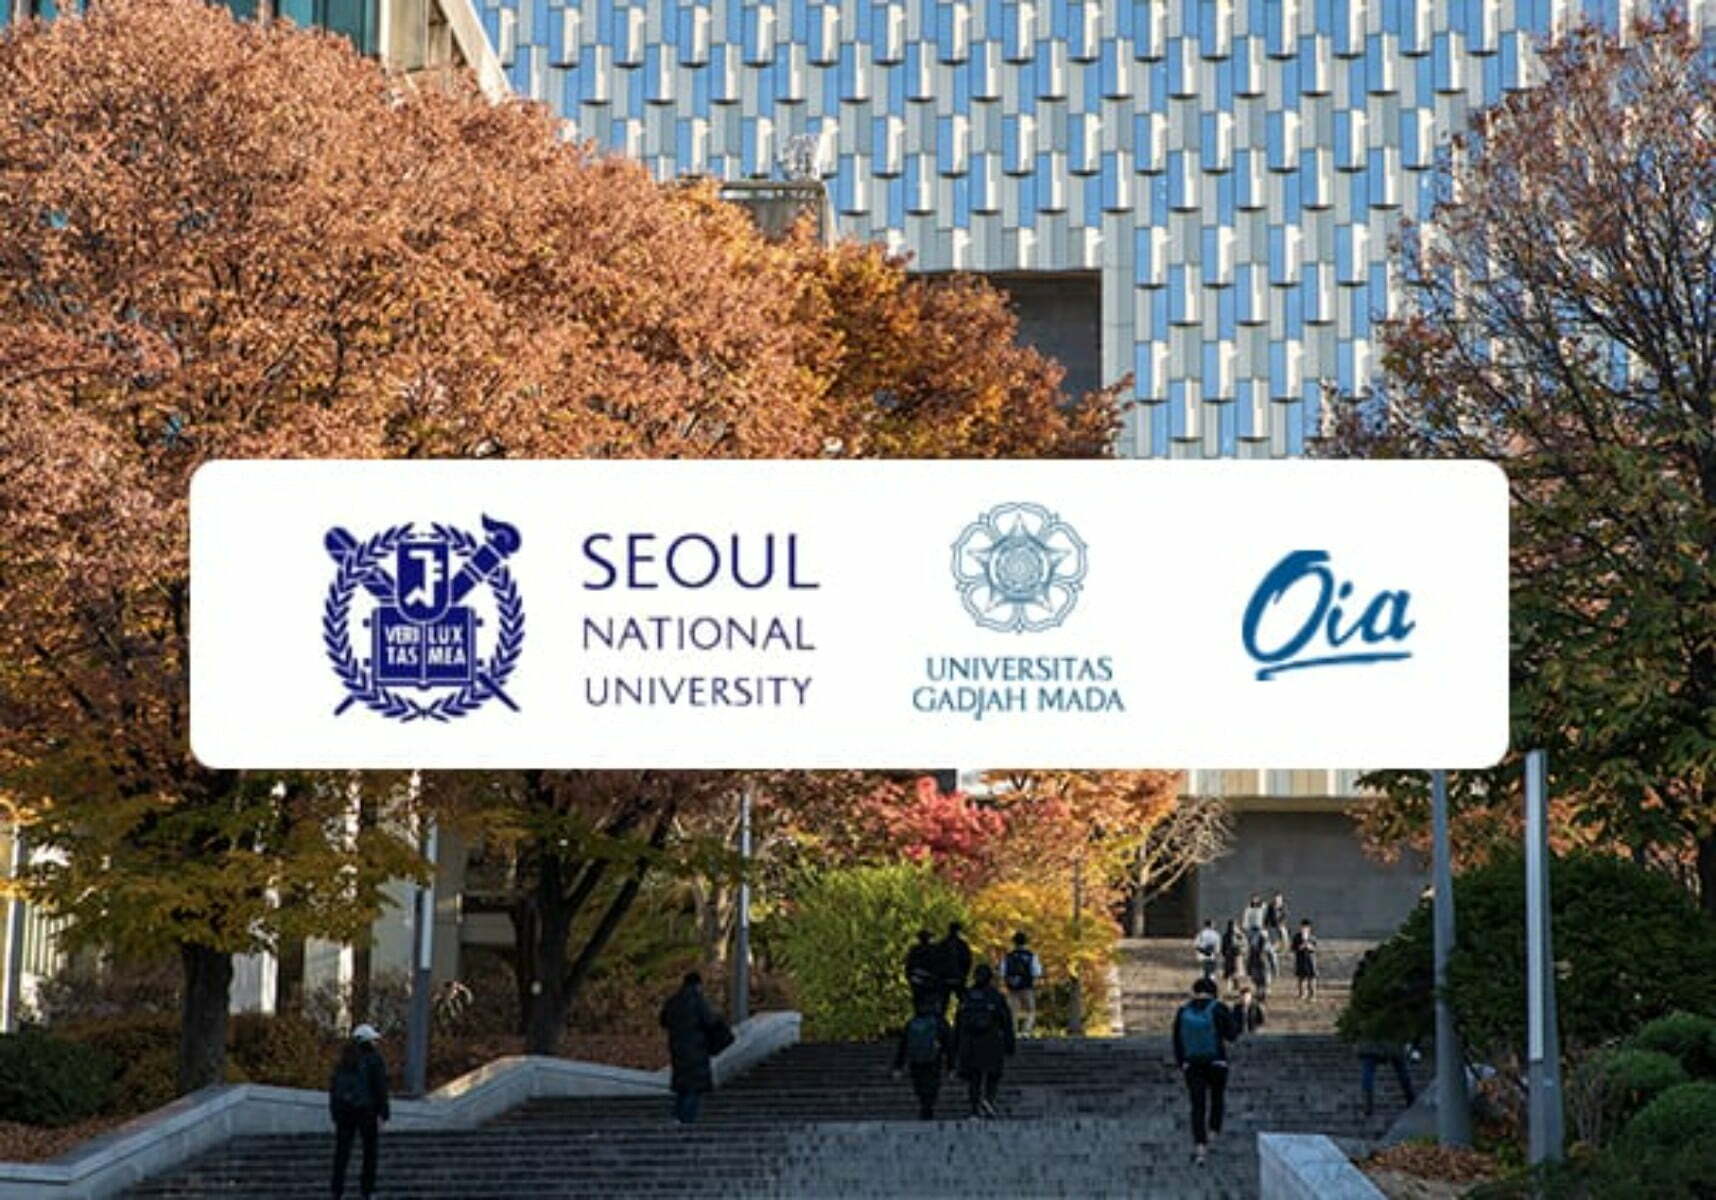 Seoul National University Global Hope Scholarships 2022-2023 for Graduate Studies